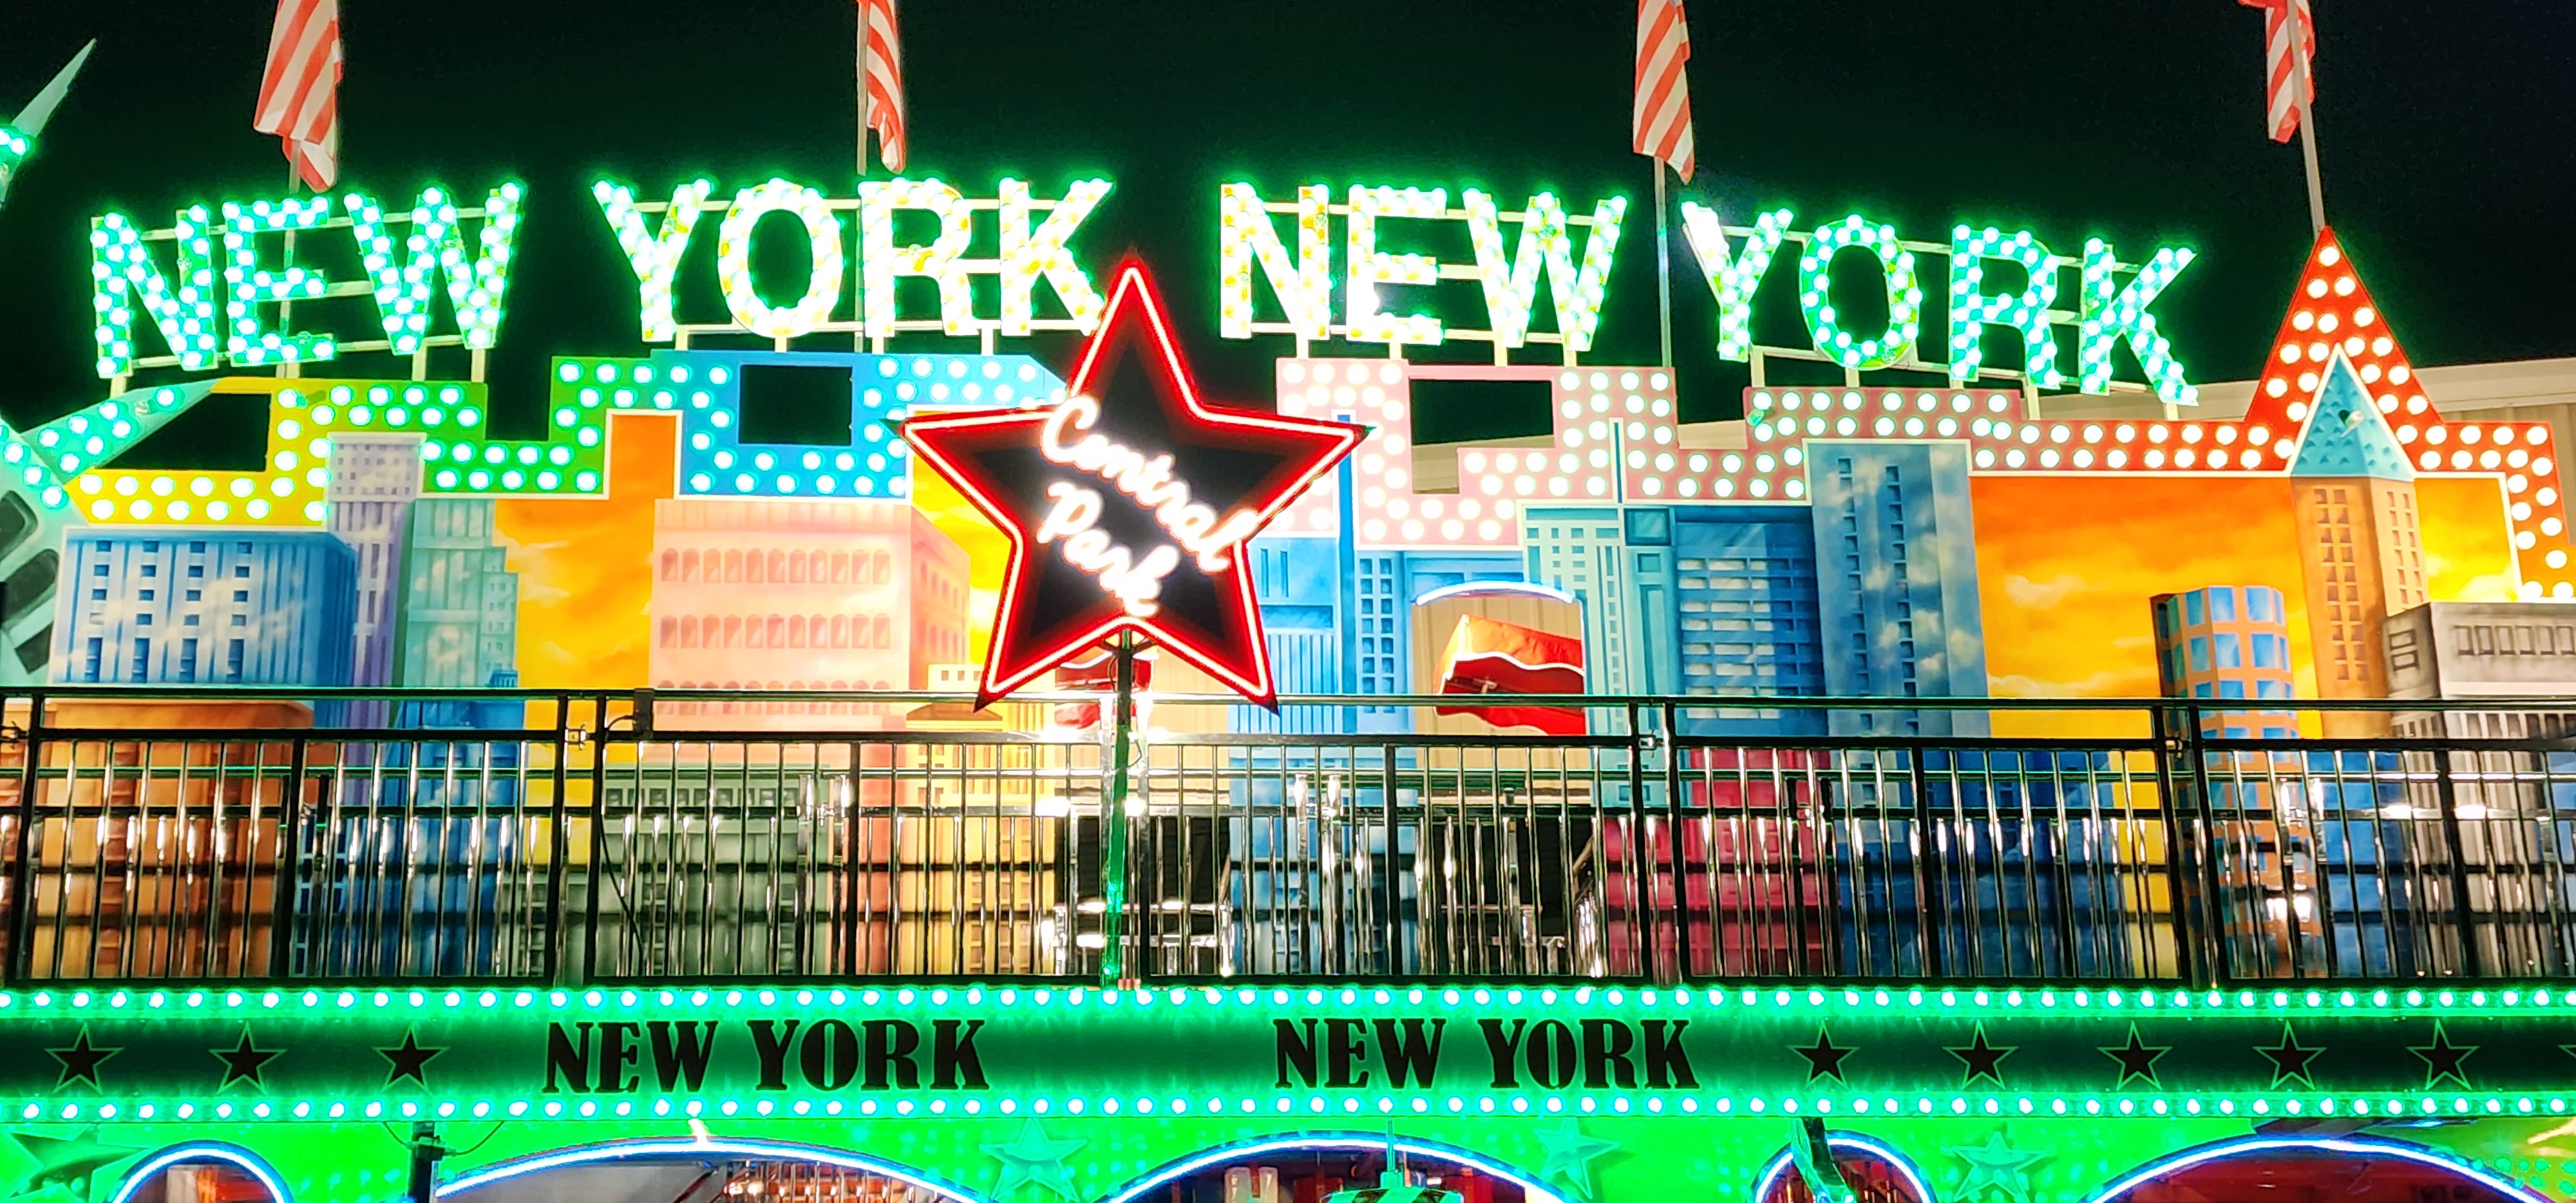 New York New York Funhouse